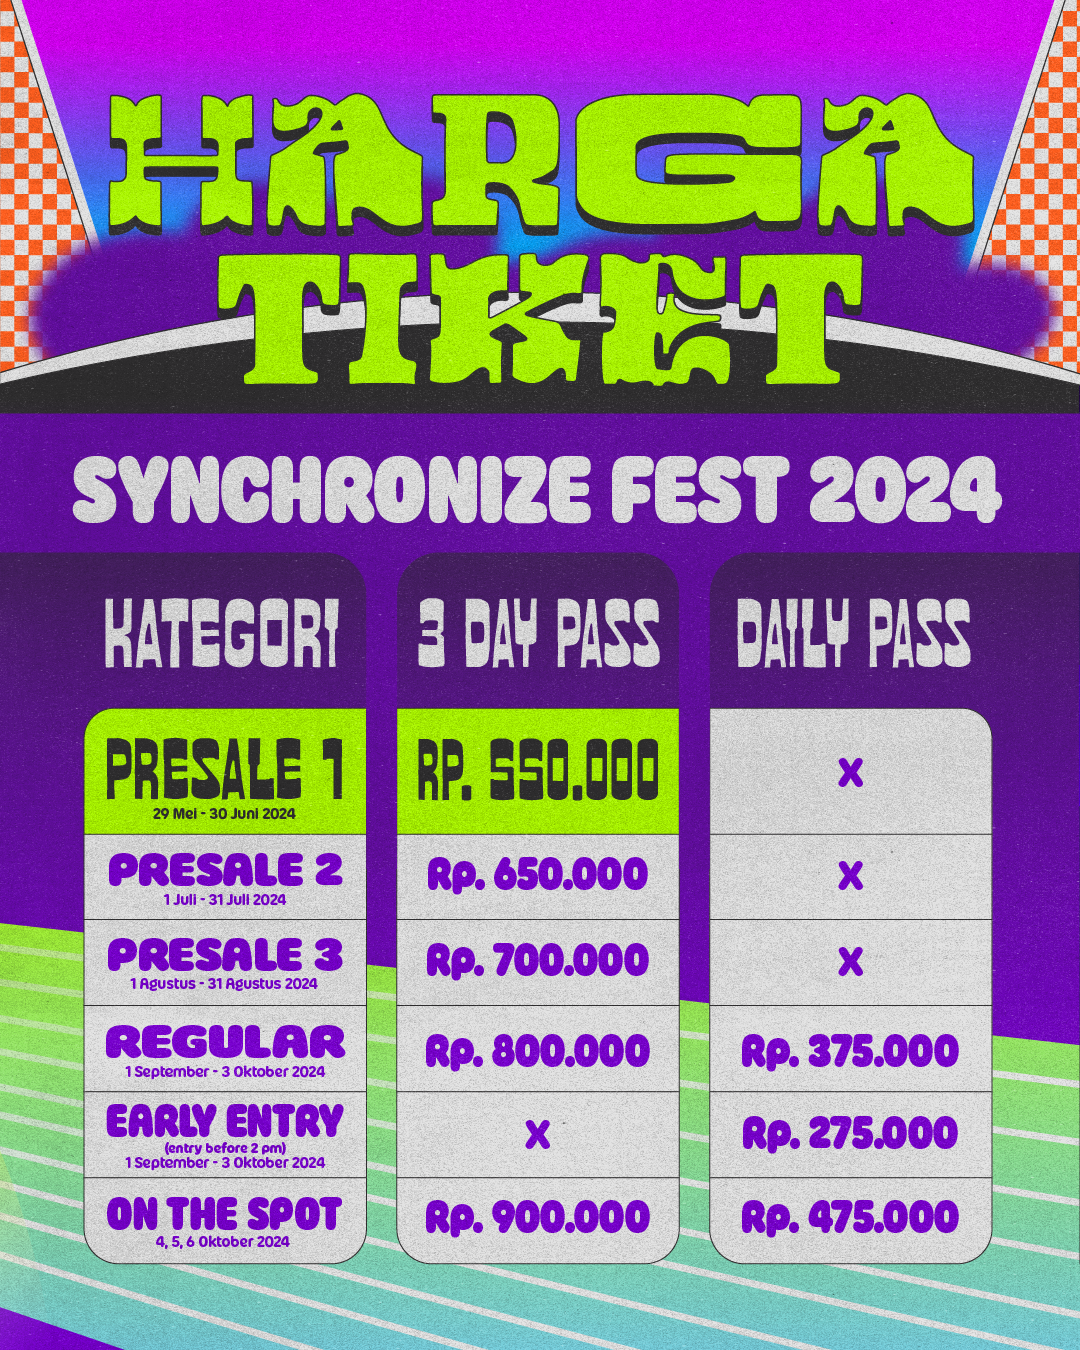 Harga tiket Synchronize Fest